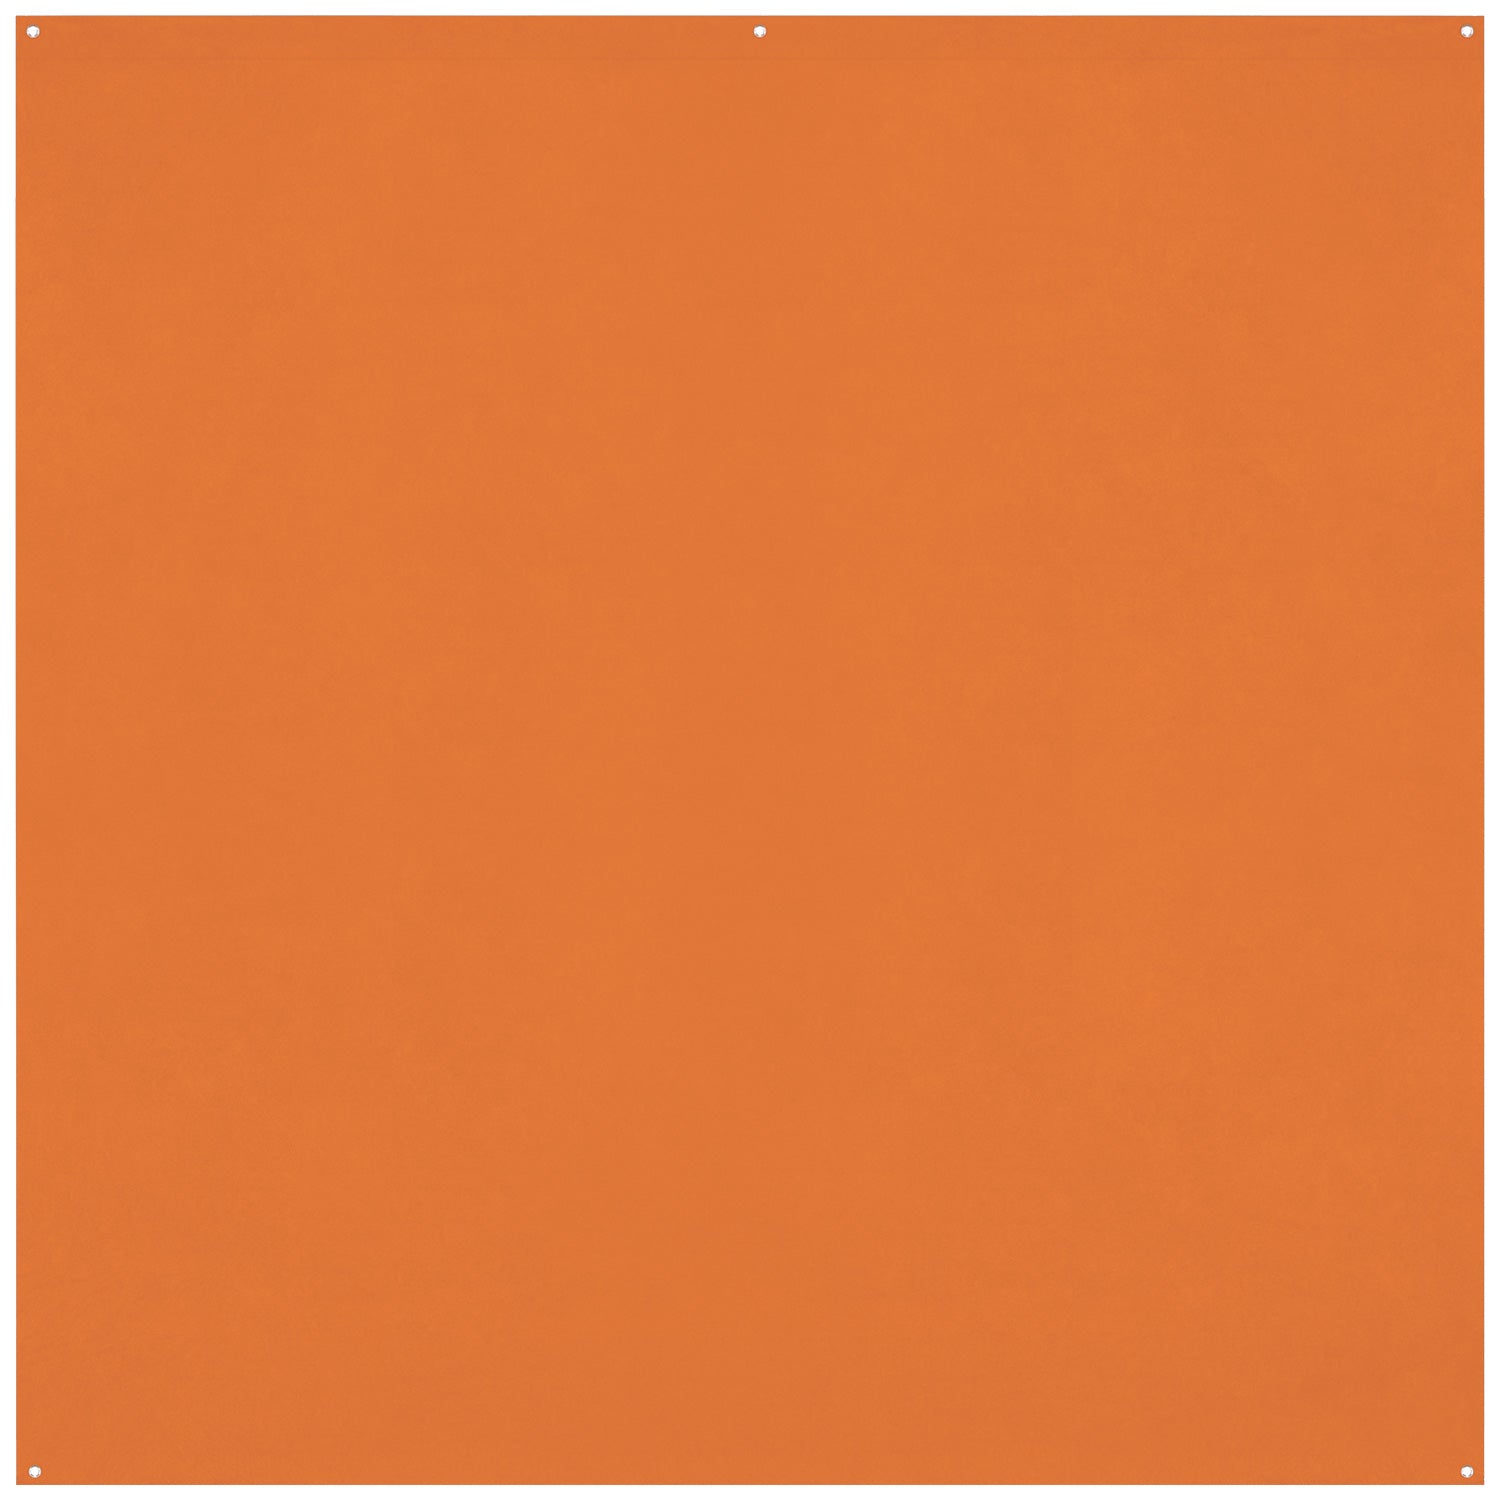 X-Drop Pro Wrinkle-Resistant Backdrop - Tiger Orange (8' x 8')